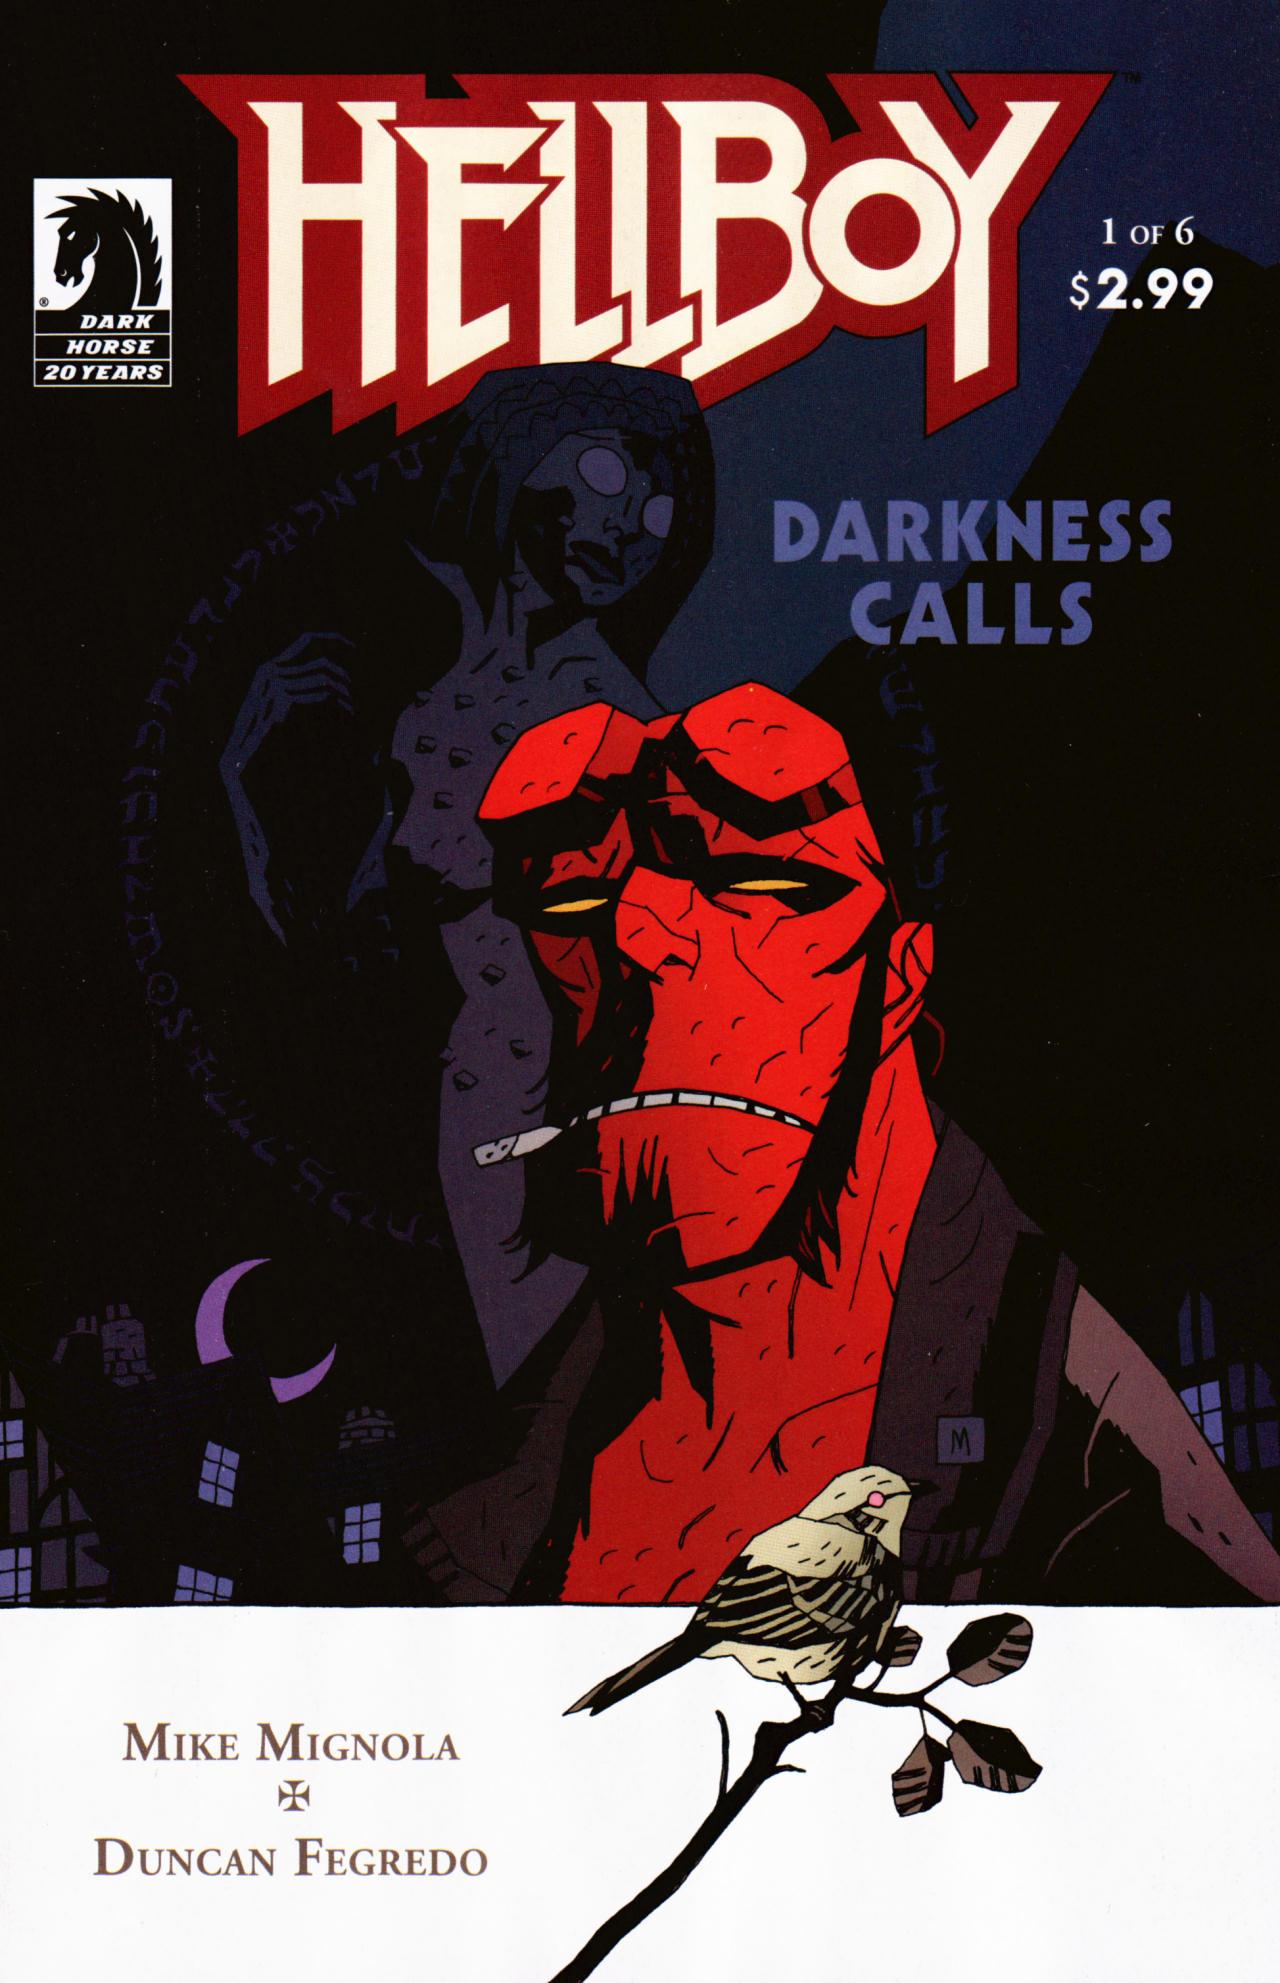 Hellboy: Darkness Calls Vol. 1 #1